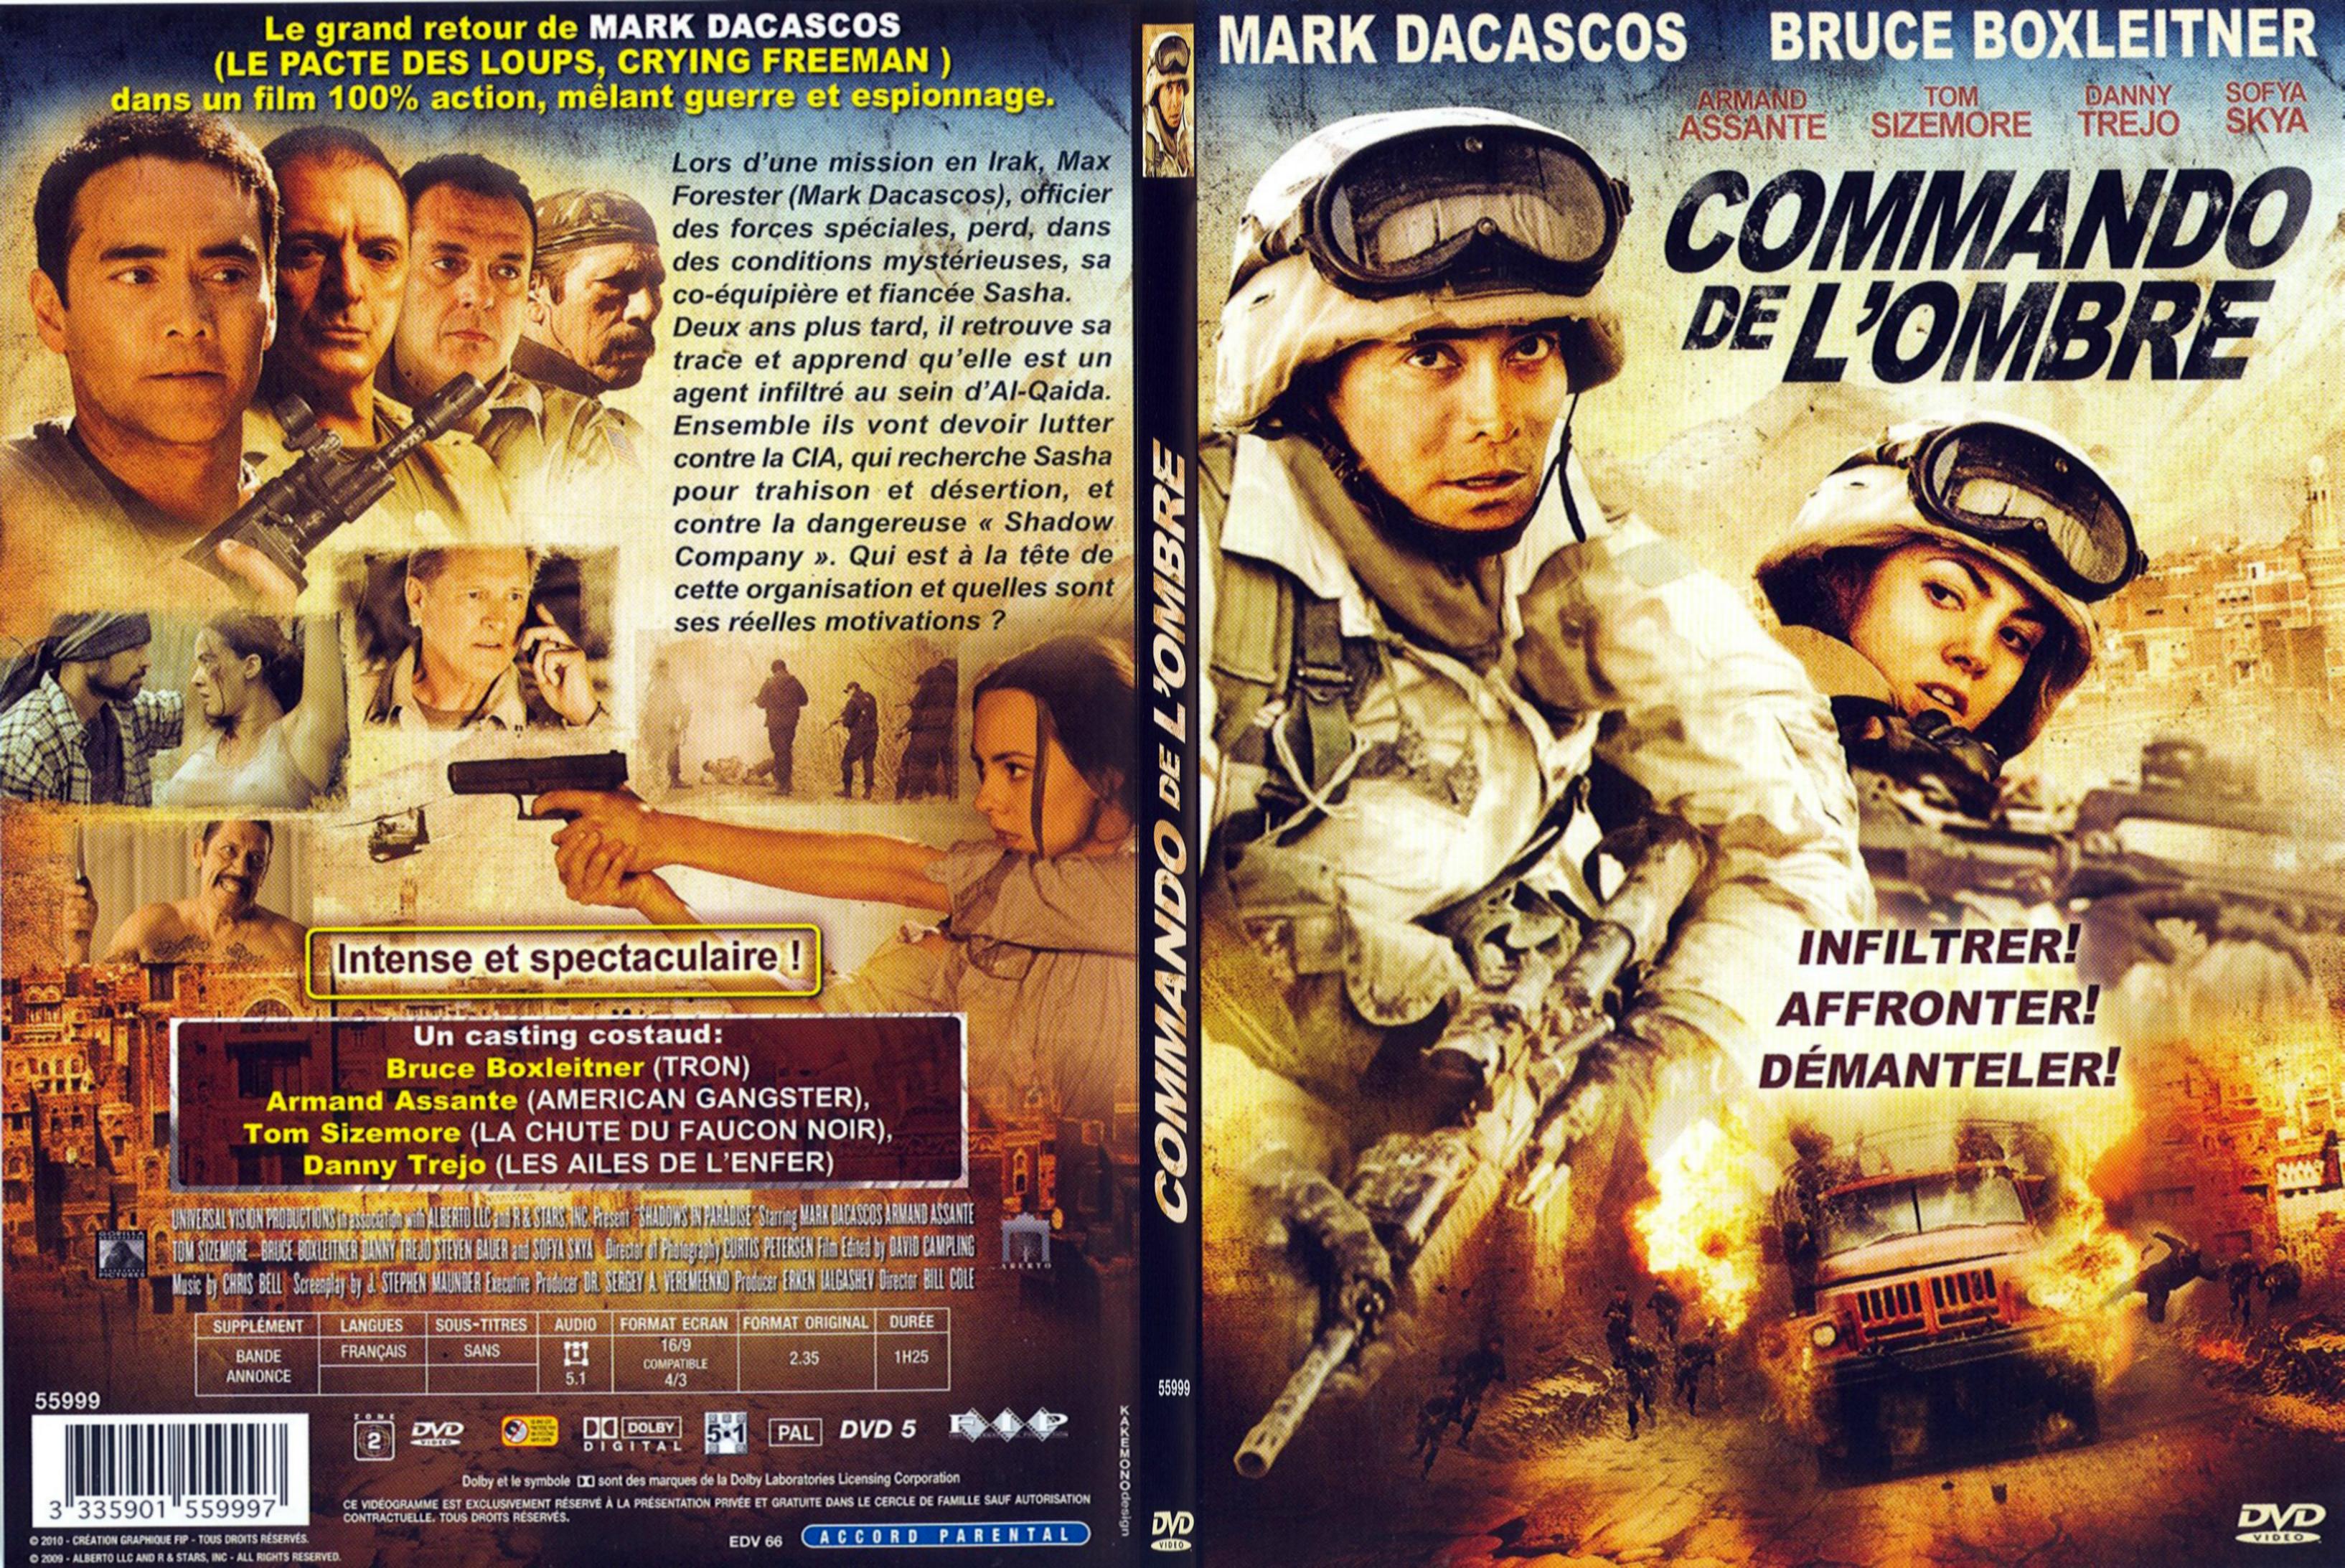 Jaquette DVD Commando de l